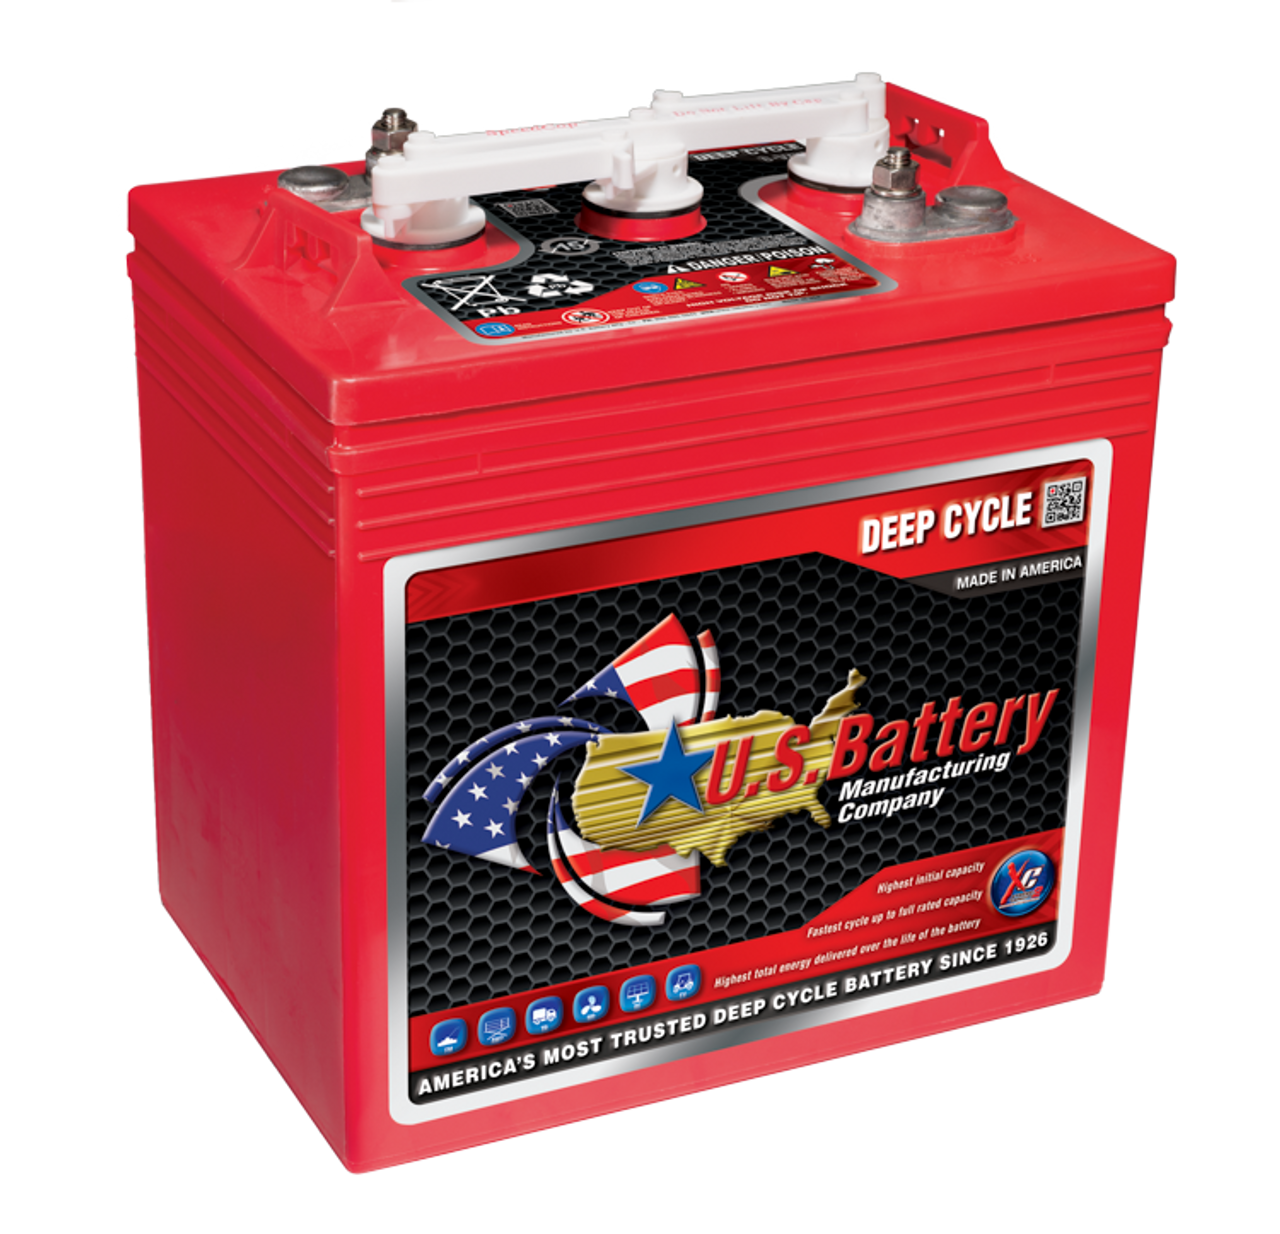 U.S Battery US2200XC2 Group GC2 6V Deep Cycle Battery